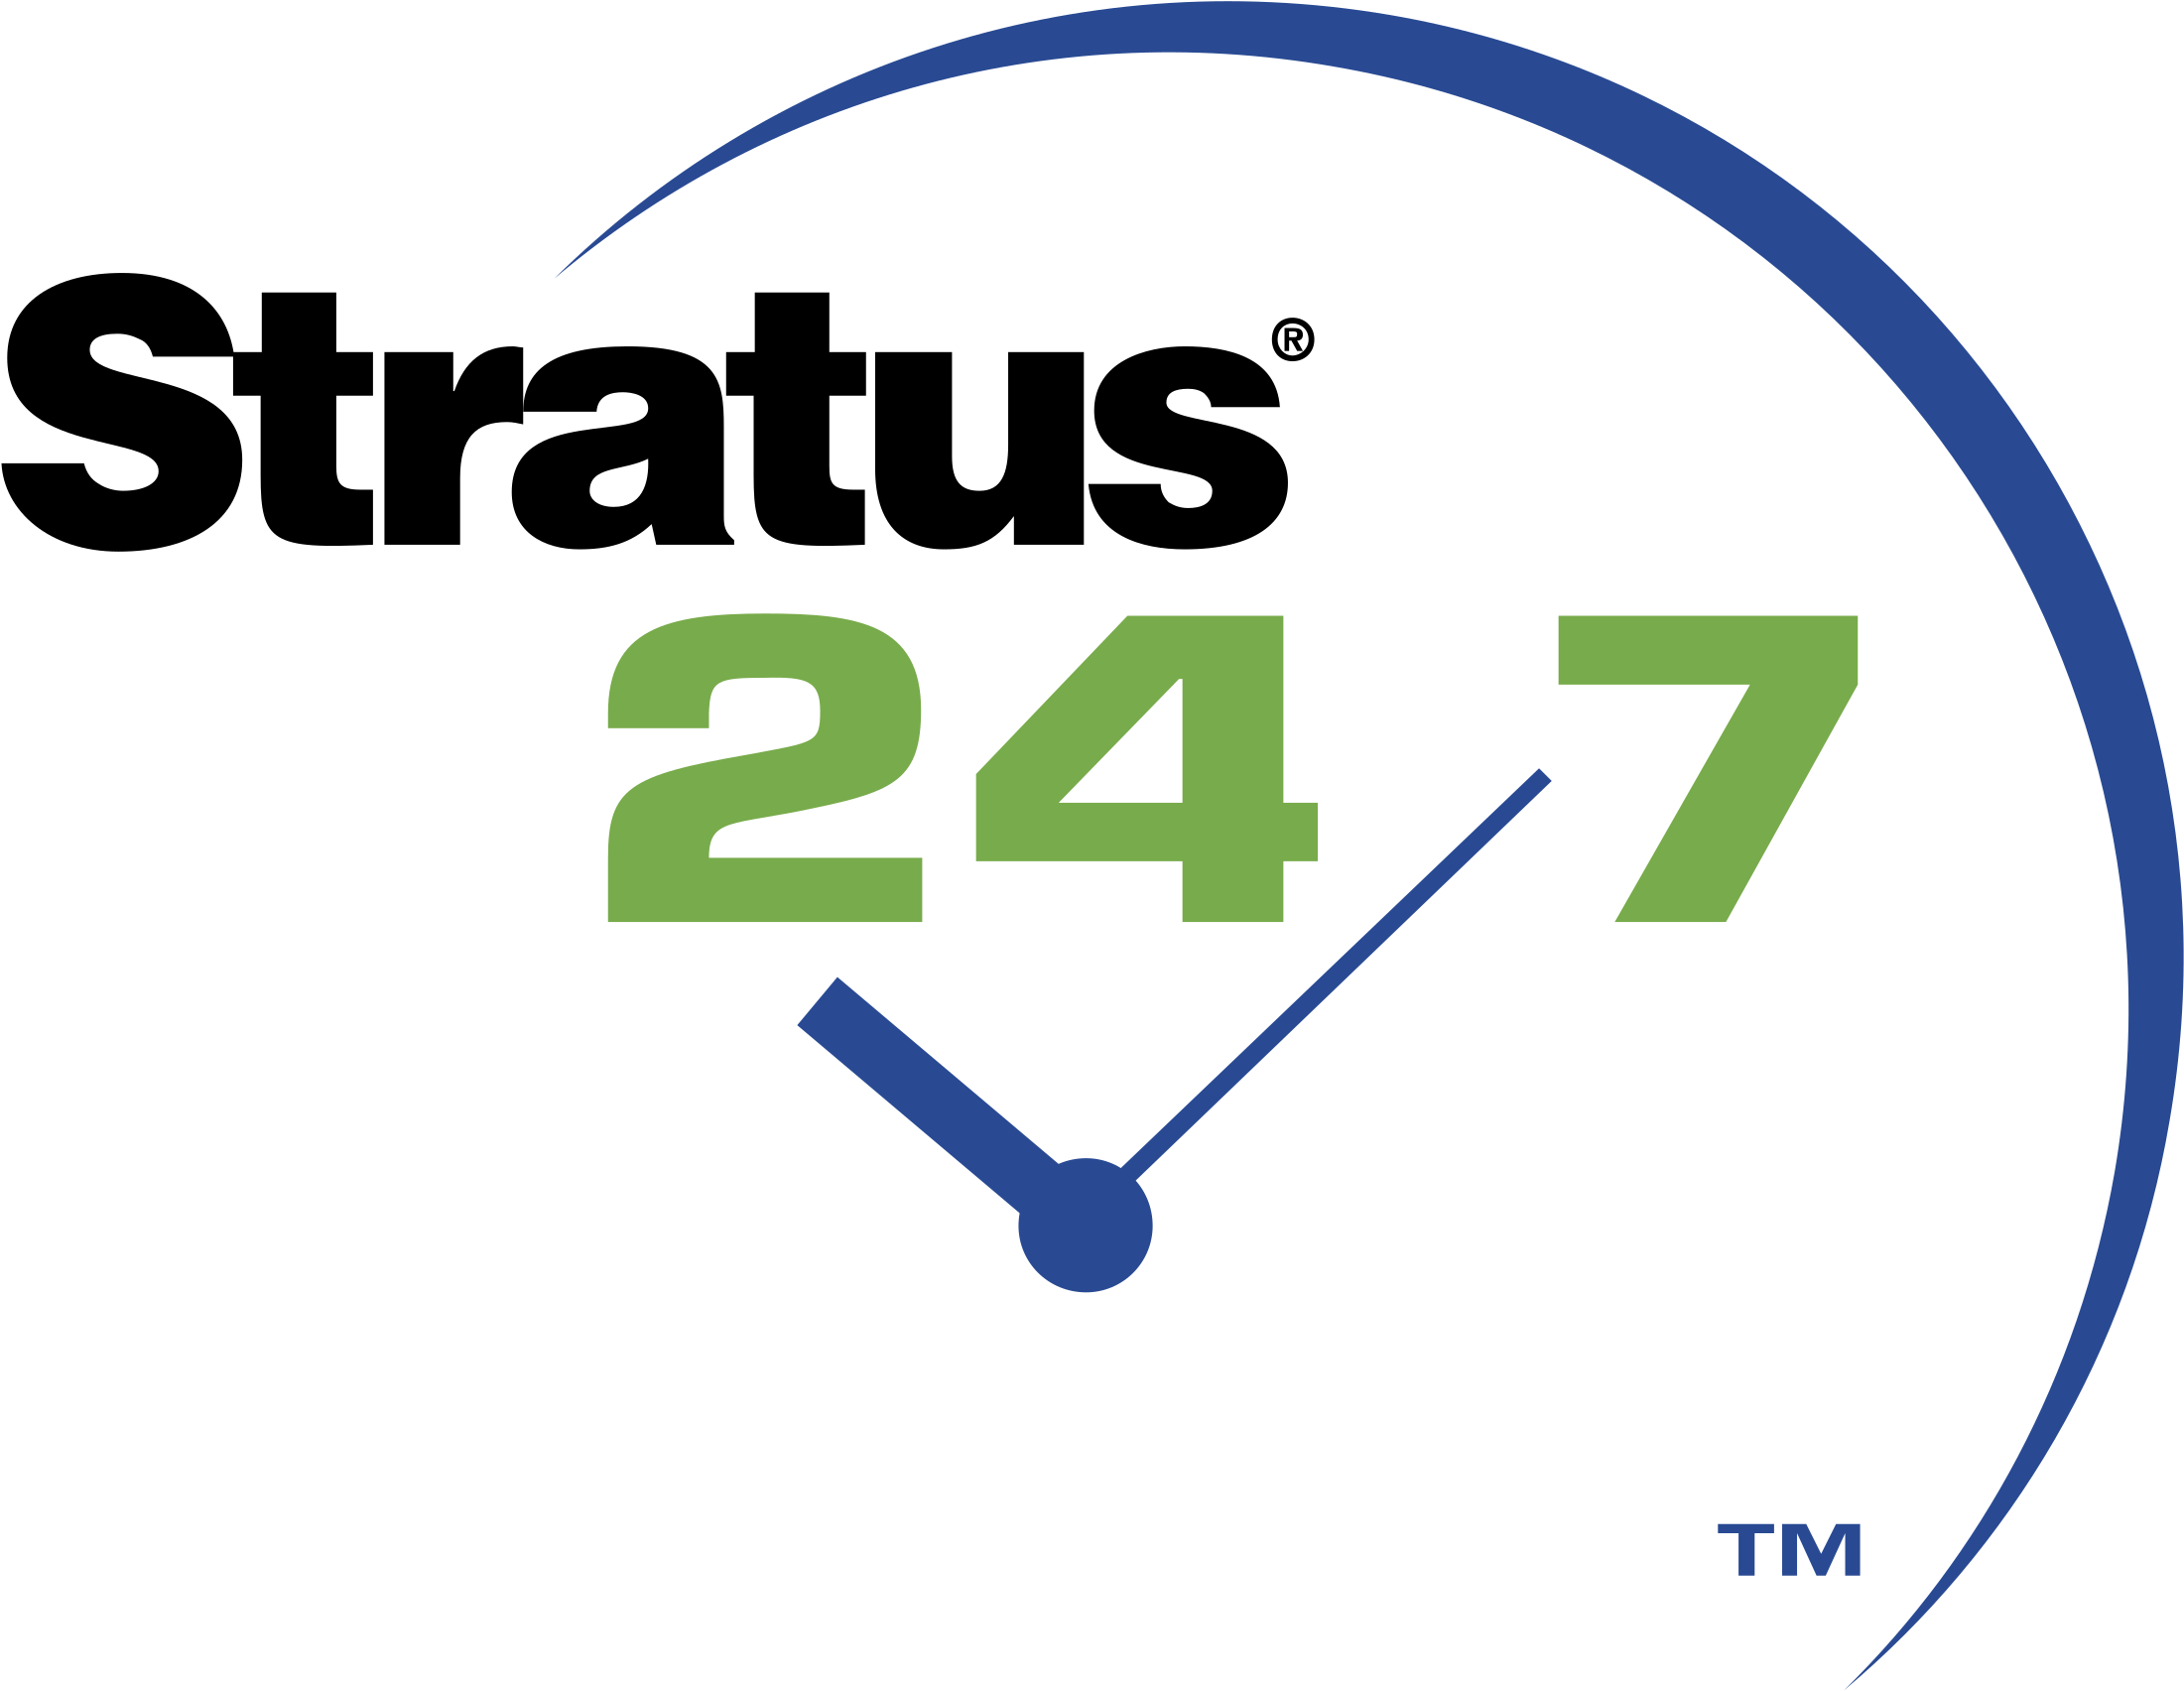 Logo Png Transparent - 24 X 7 Gif Clipart (2400x2400), Png Download